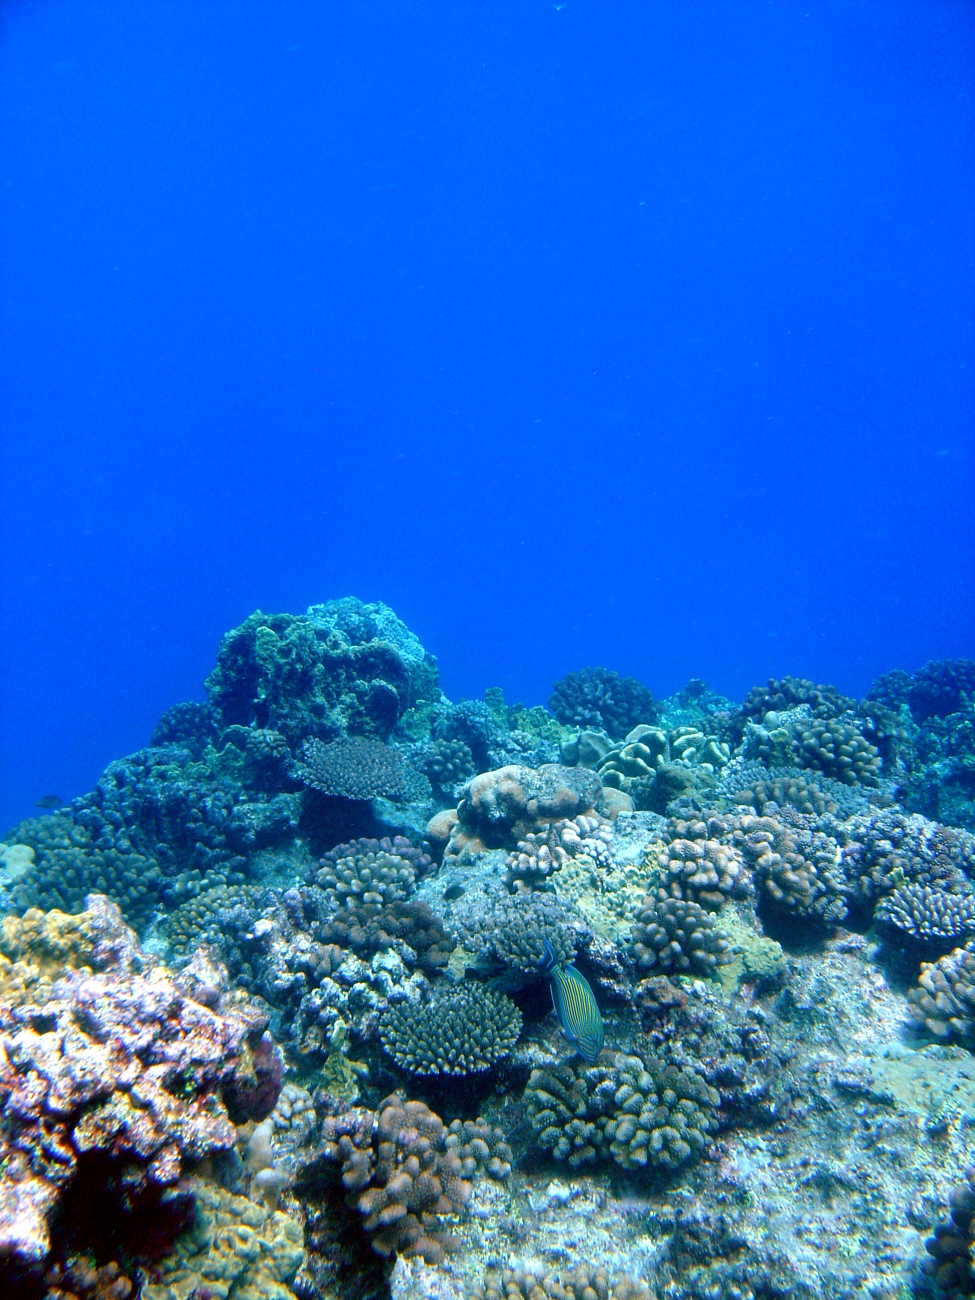 Reef scene with angelfish